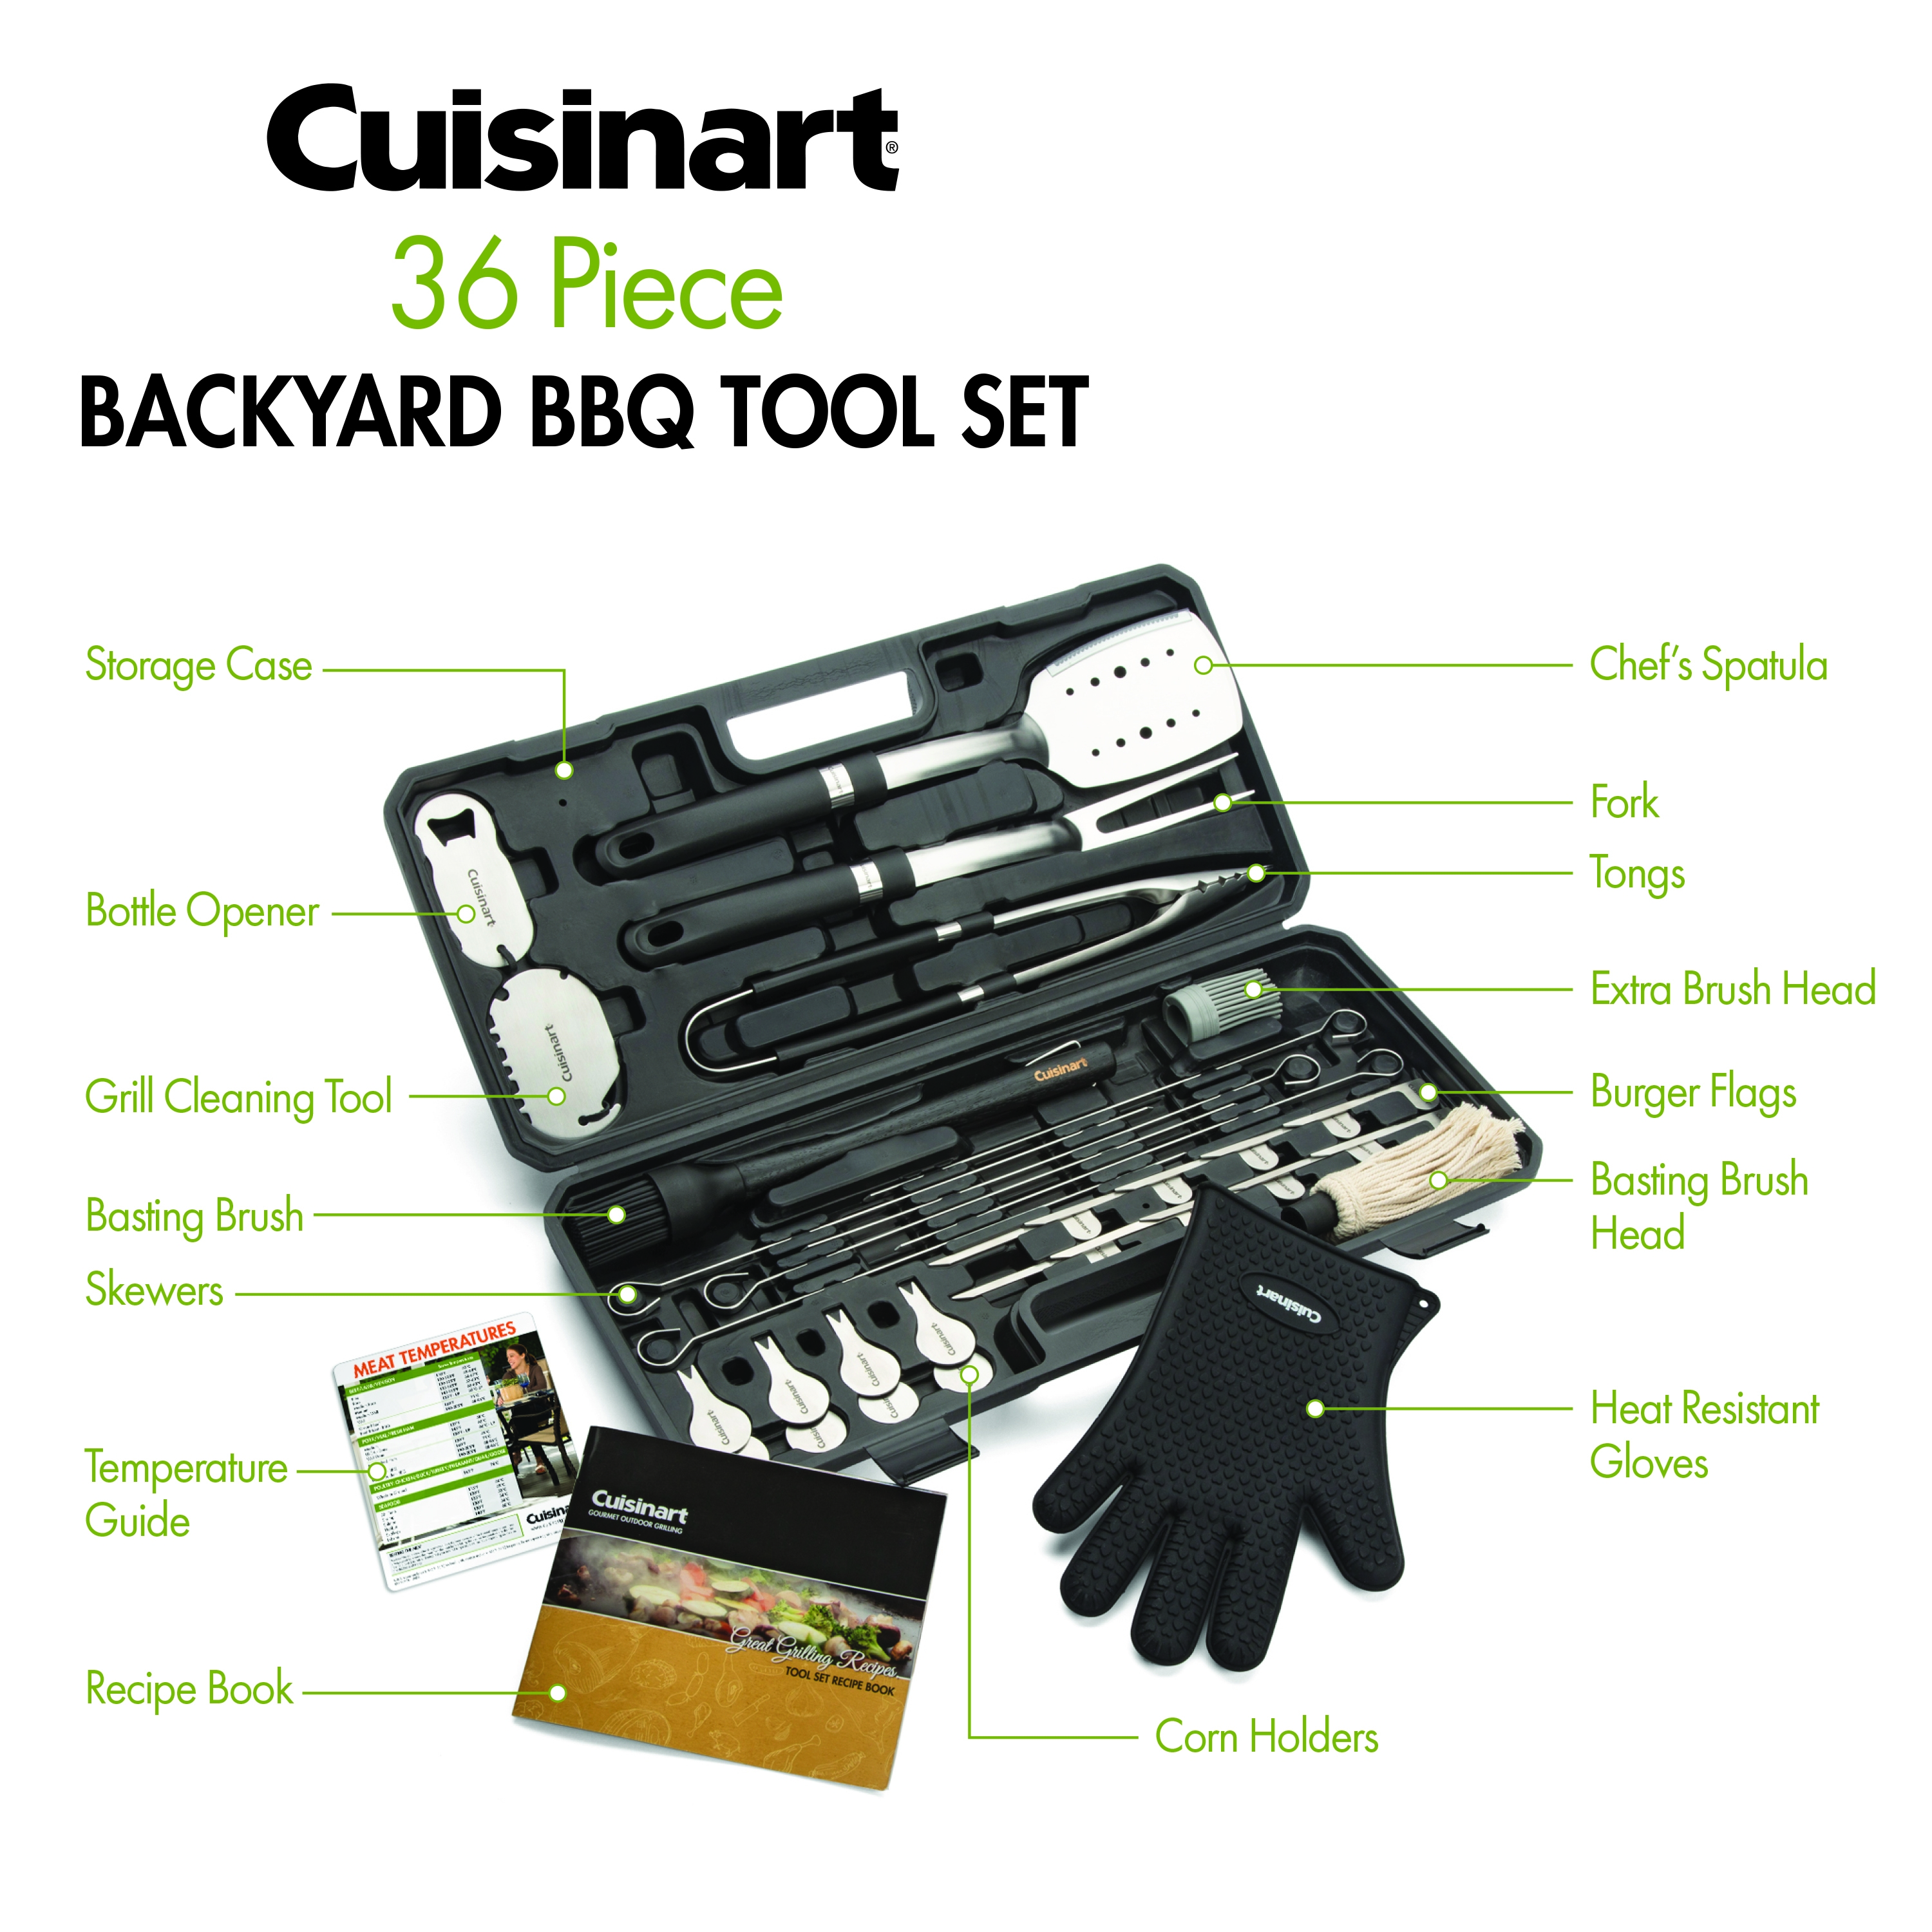 Cuisinart CGS-8036 Backyard BBQ Tool Set, 36-Piece